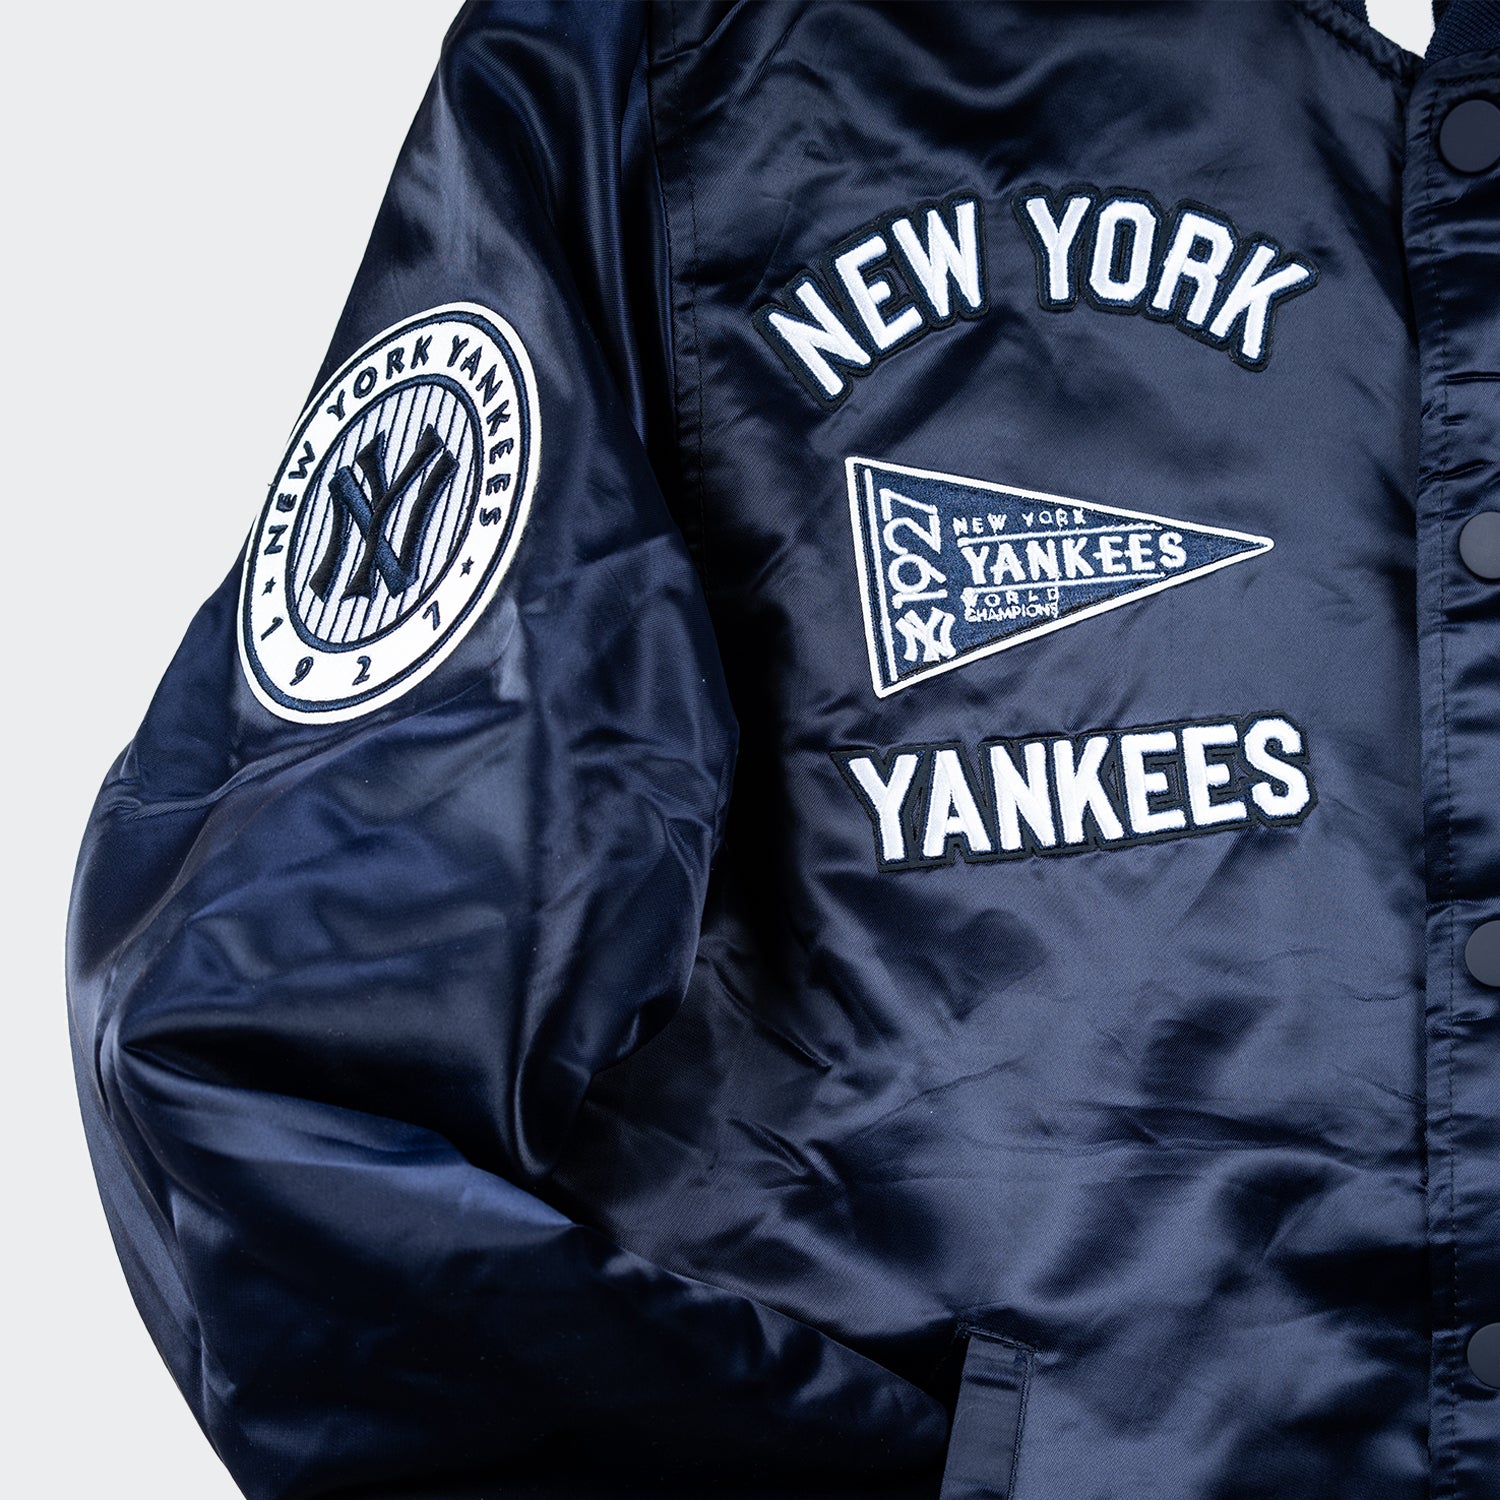 Maker of Jacket Men Jackets New York Navy Blue Yankees Satin